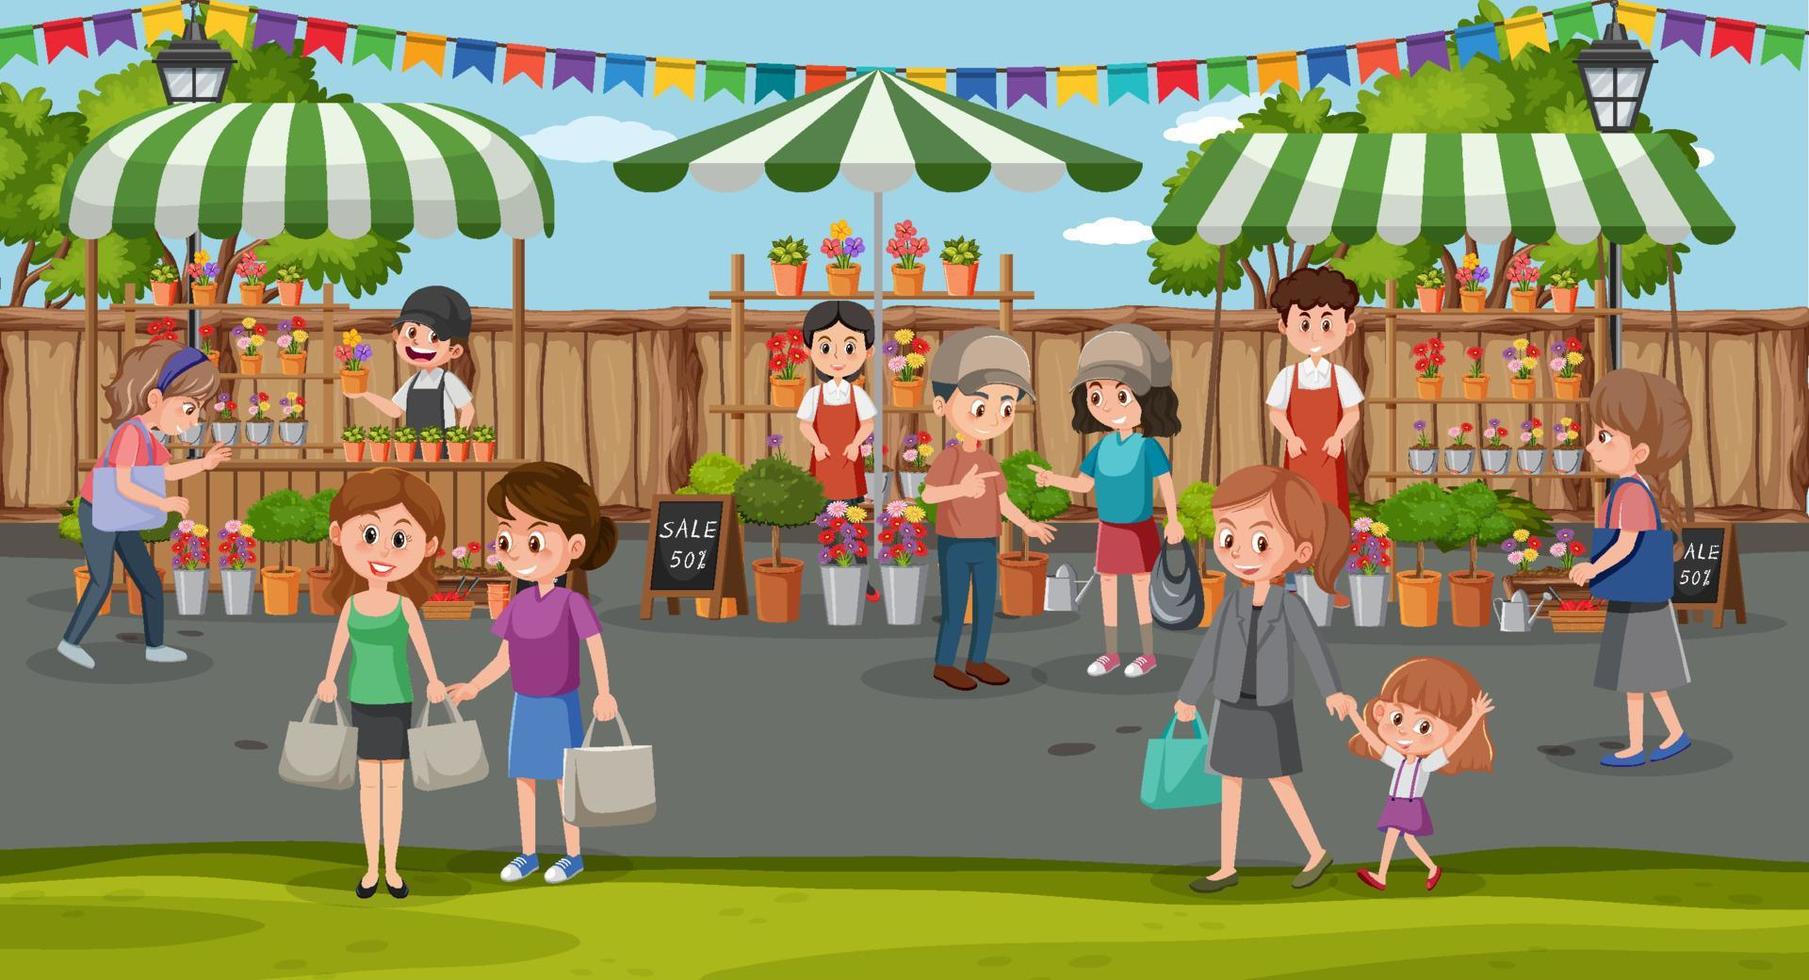 Flea market scene in cartoon style vector